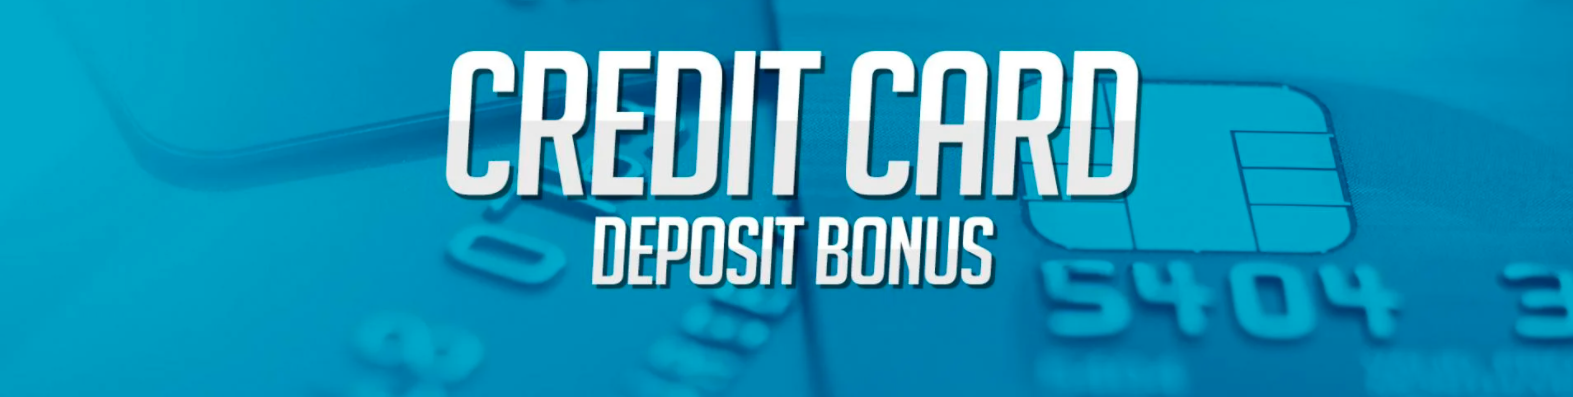 BetPhoenix Credit Card bonus